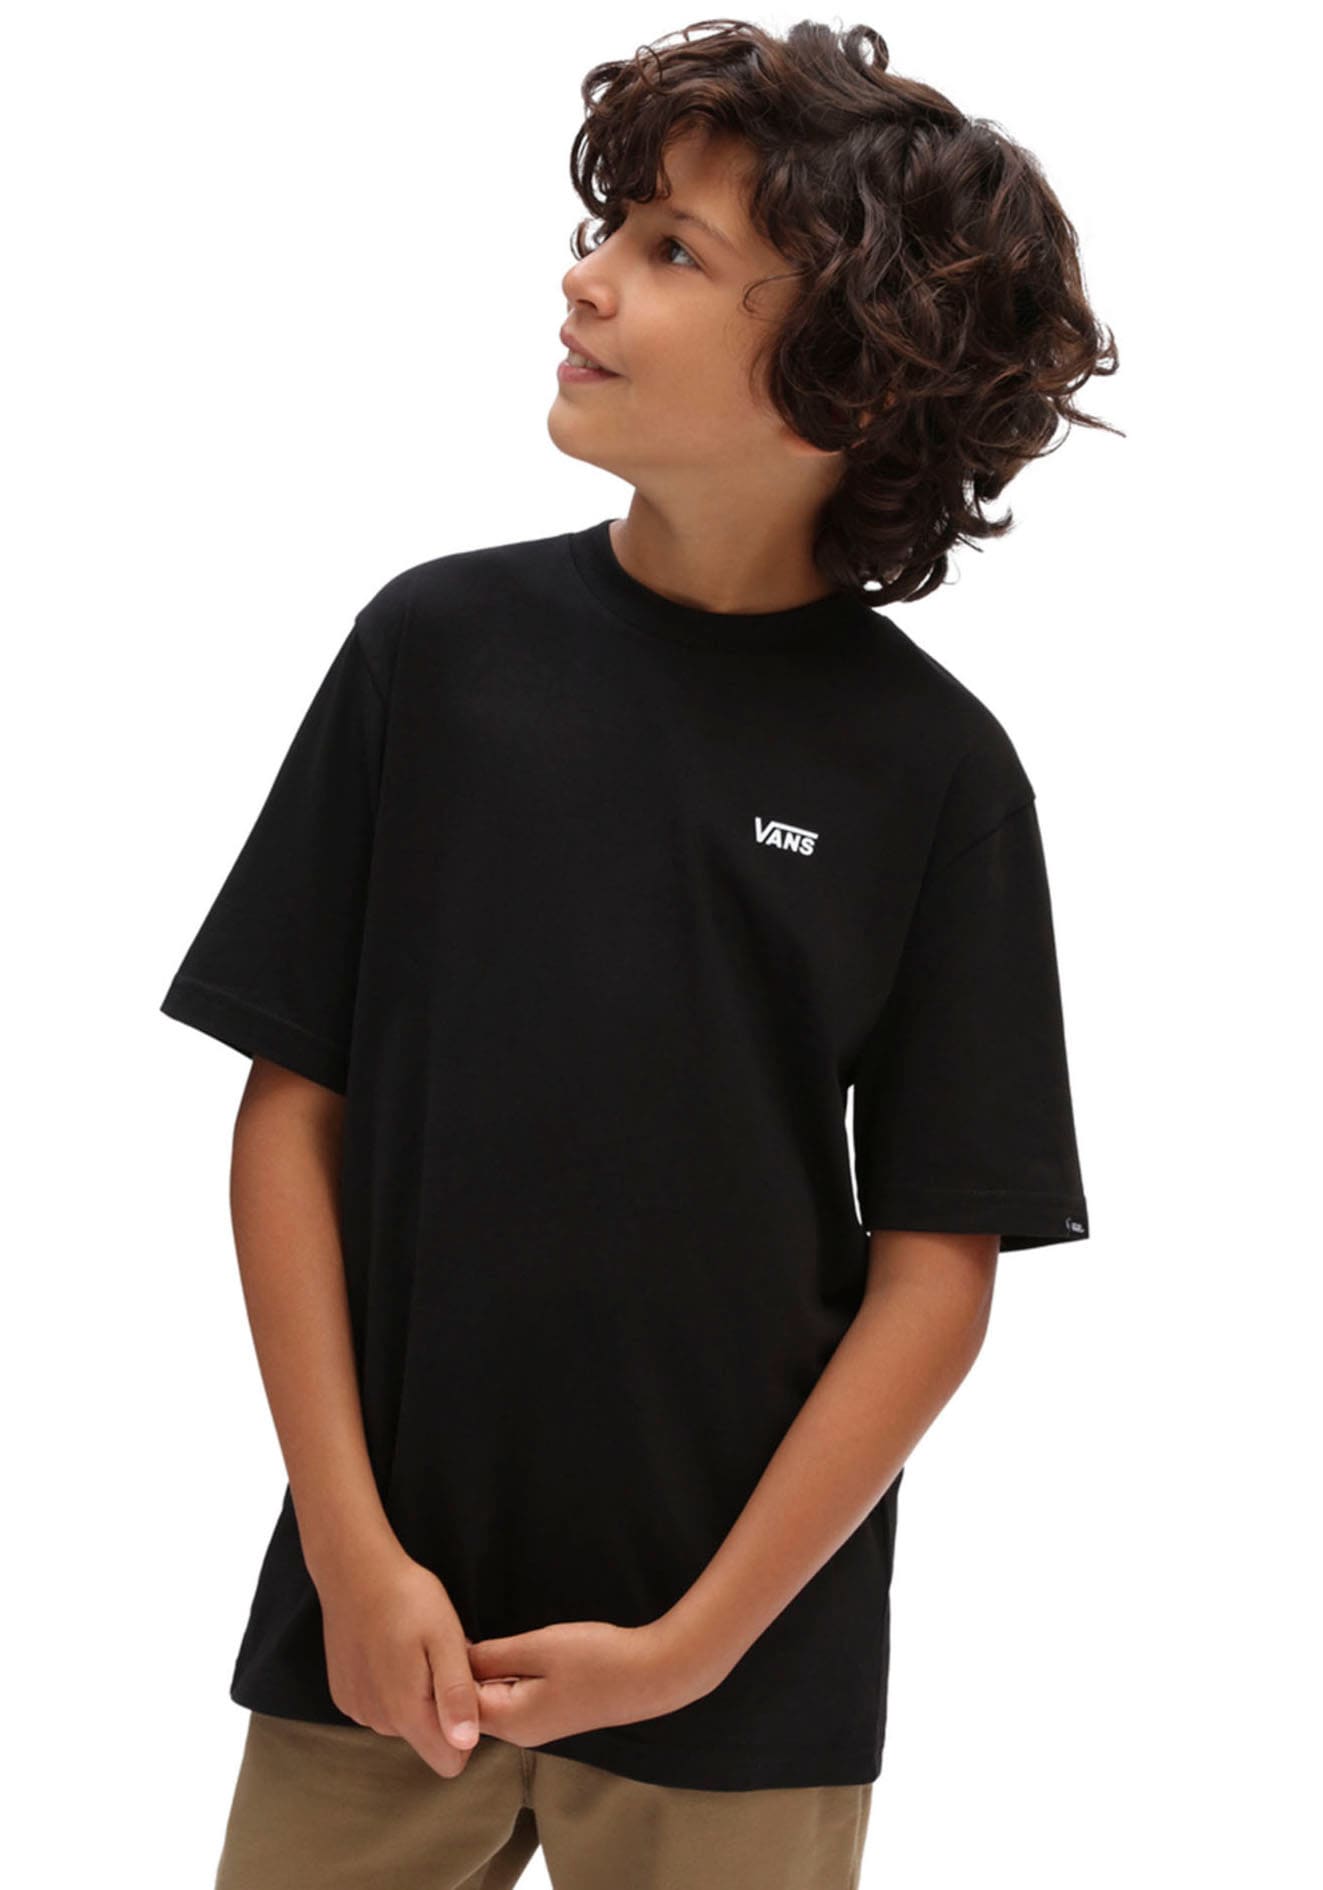 »BY TEE BAUR LEFT Vans CHEST T-Shirt | BOYS« bestellen online